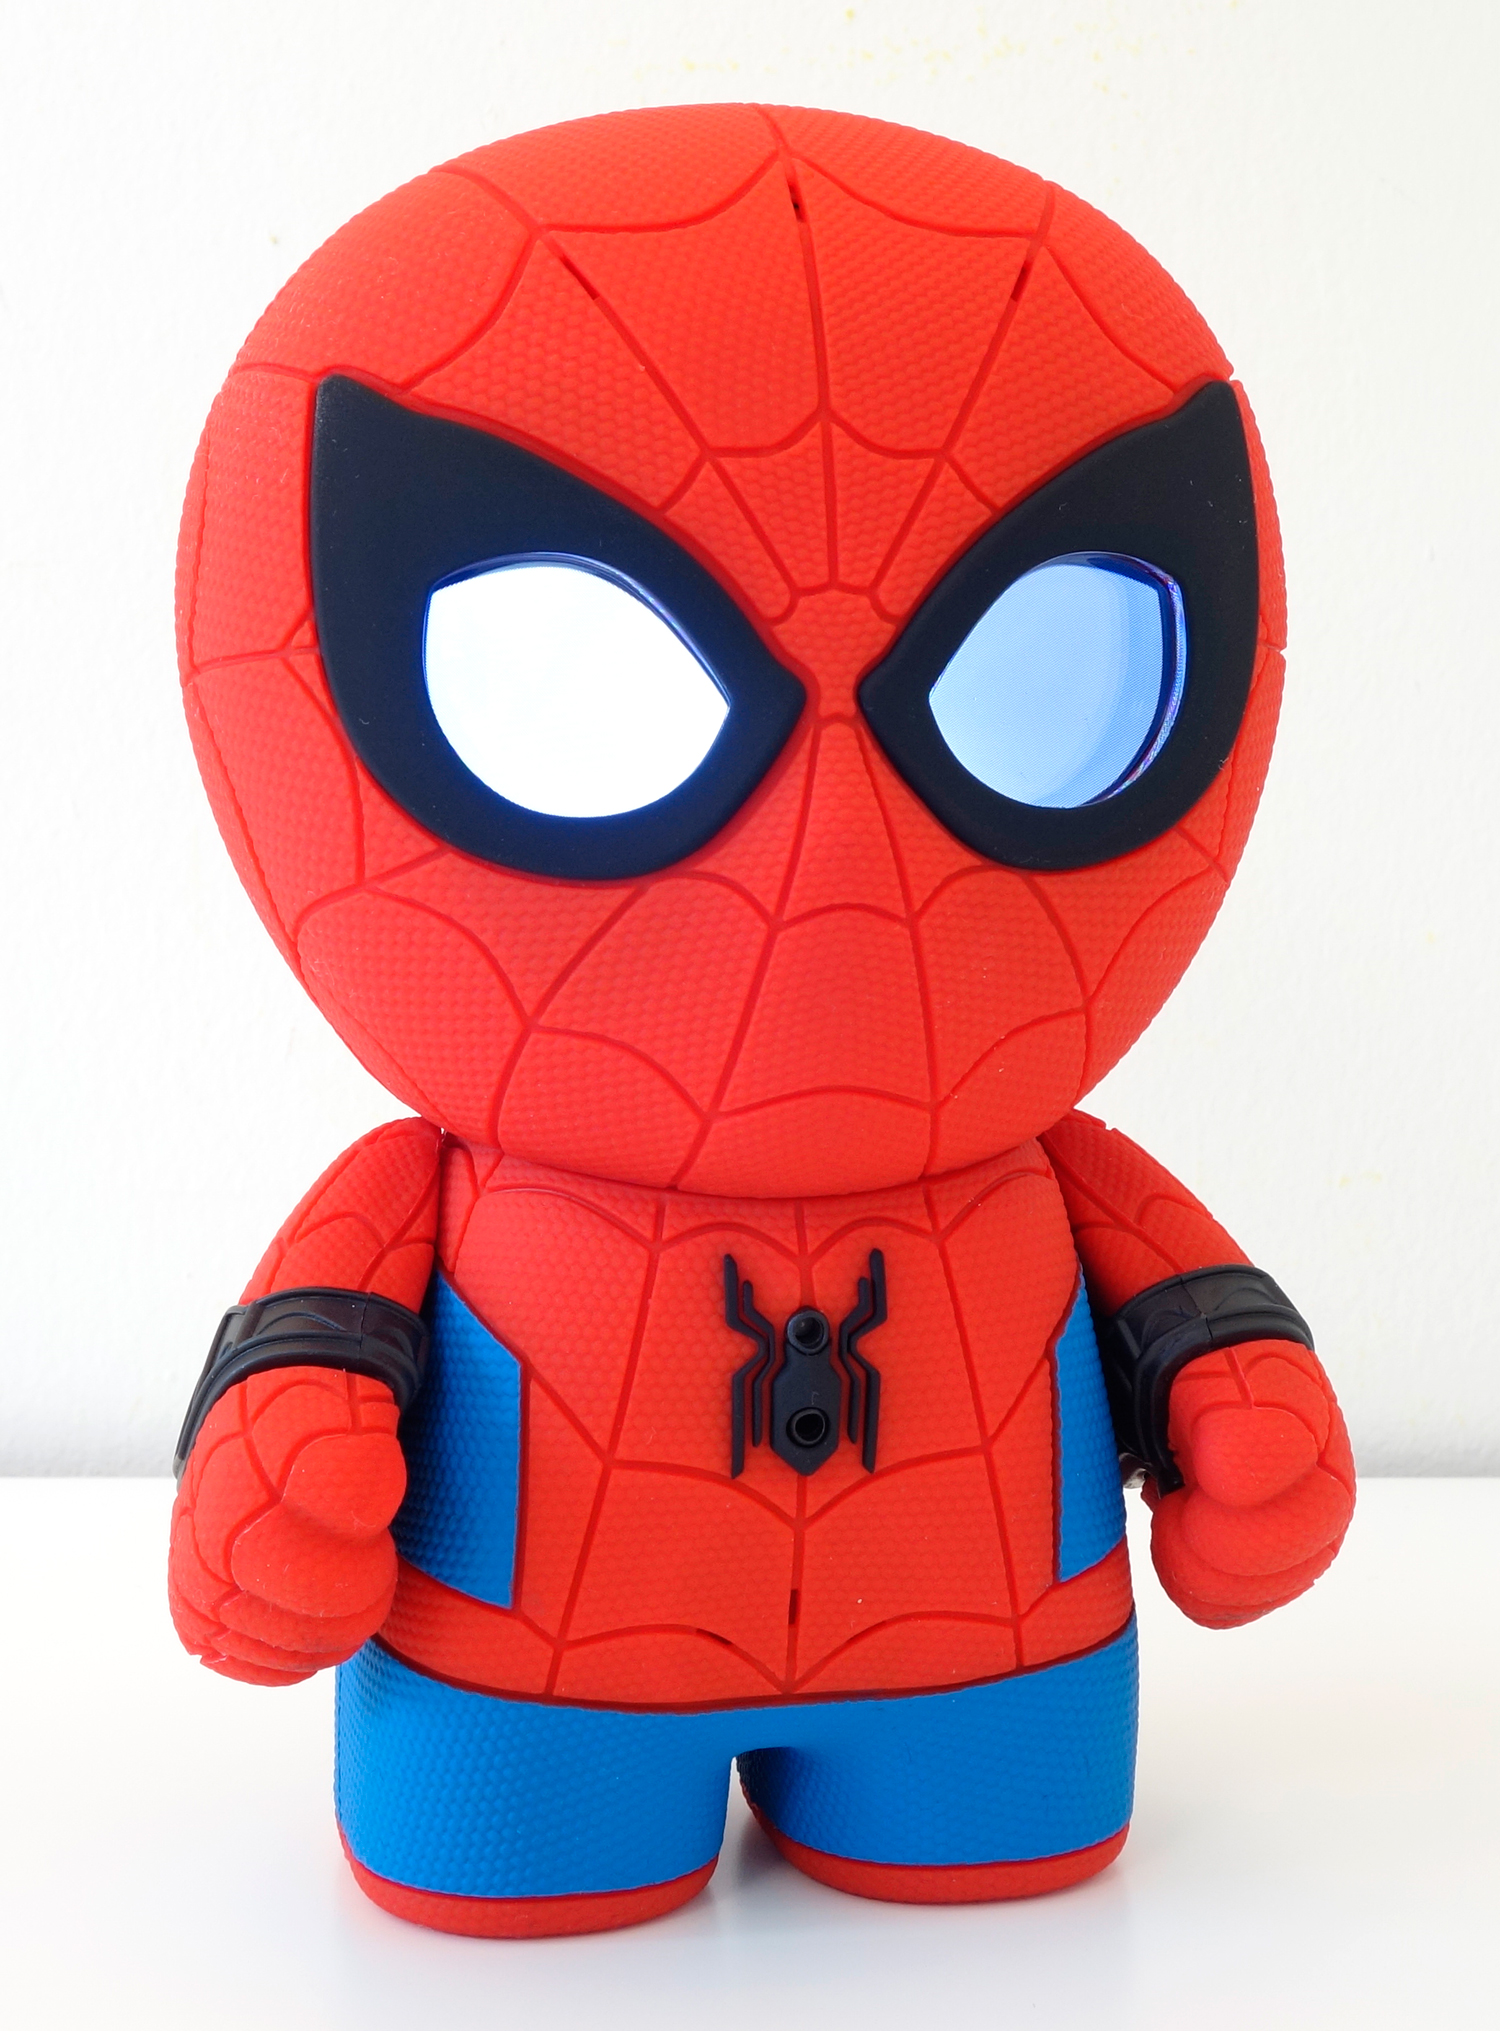 Sphero’s Adorable Spider-Man Toy Has AI Smarts (That Aren’t Creepy)